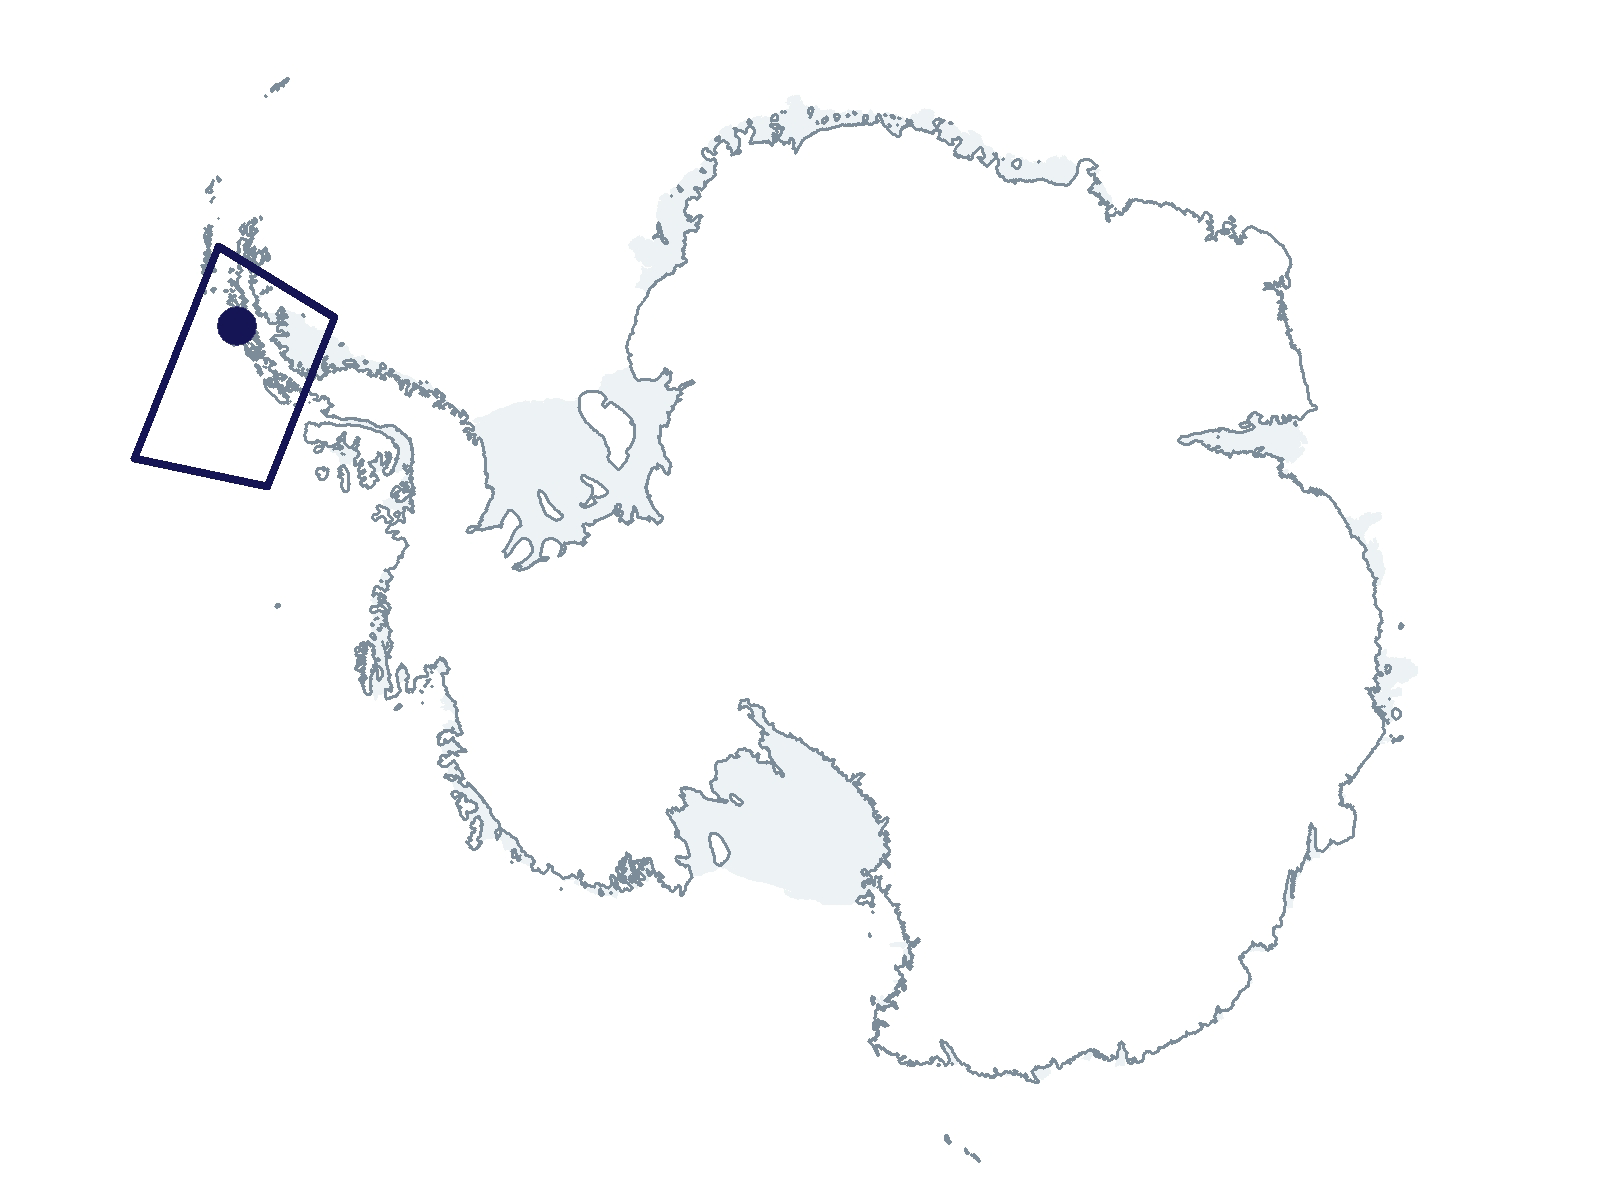 B-285-L/P Research Location(s): West Antarctic Peninsula